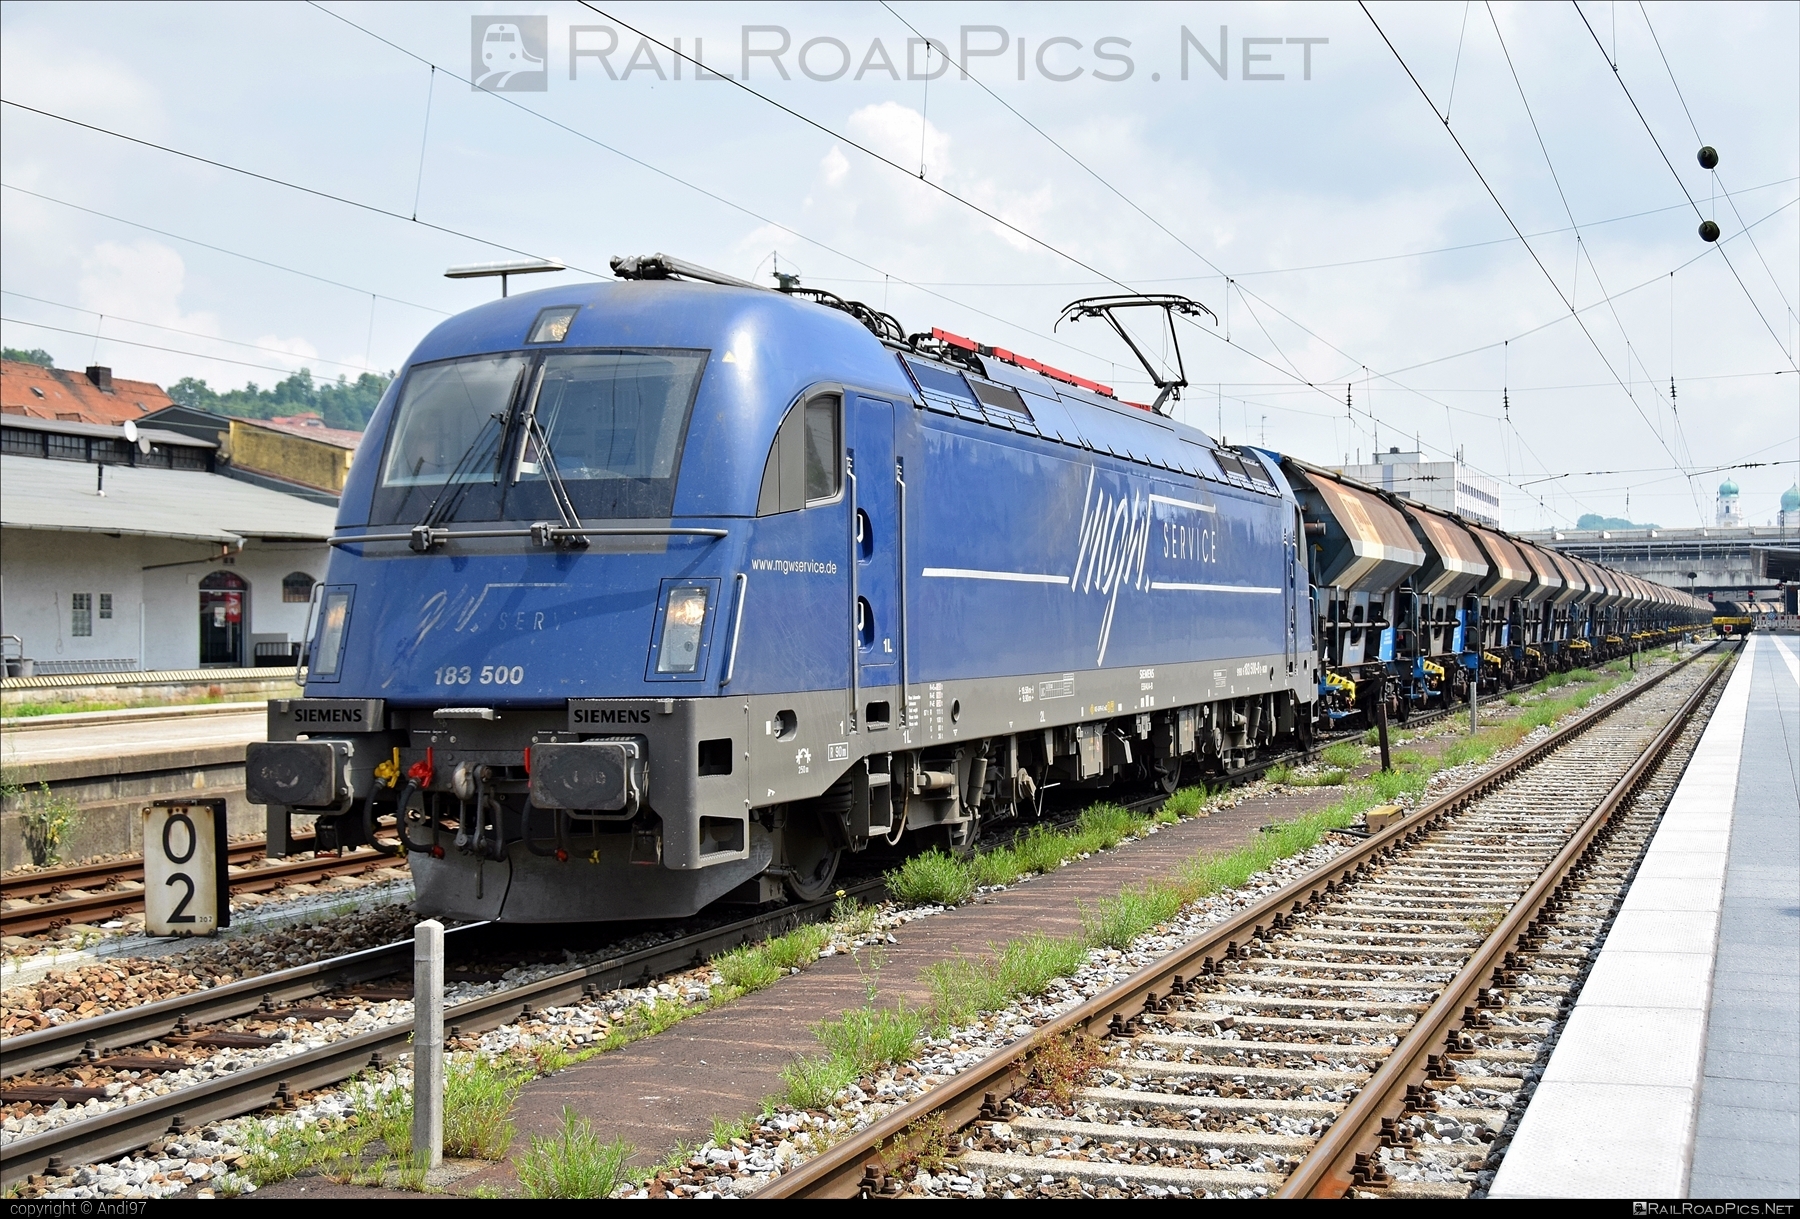 Siemens ES 64 U4 - 183 500 operated by Salzburger Eisenbahn Transportlogistik GmbH #SalzburgerEisenbahnTransportlogistik #SalzburgerEisenbahnTransportlogistikGmbH #duslo #es64 #es64u4 #eurosprinter #hopperwagon #mgw #mgwServiceGmbH #setg #siemens #siemensEs64 #siemensEs64u4 #siemenstaurus #taurus #tauruslocomotive